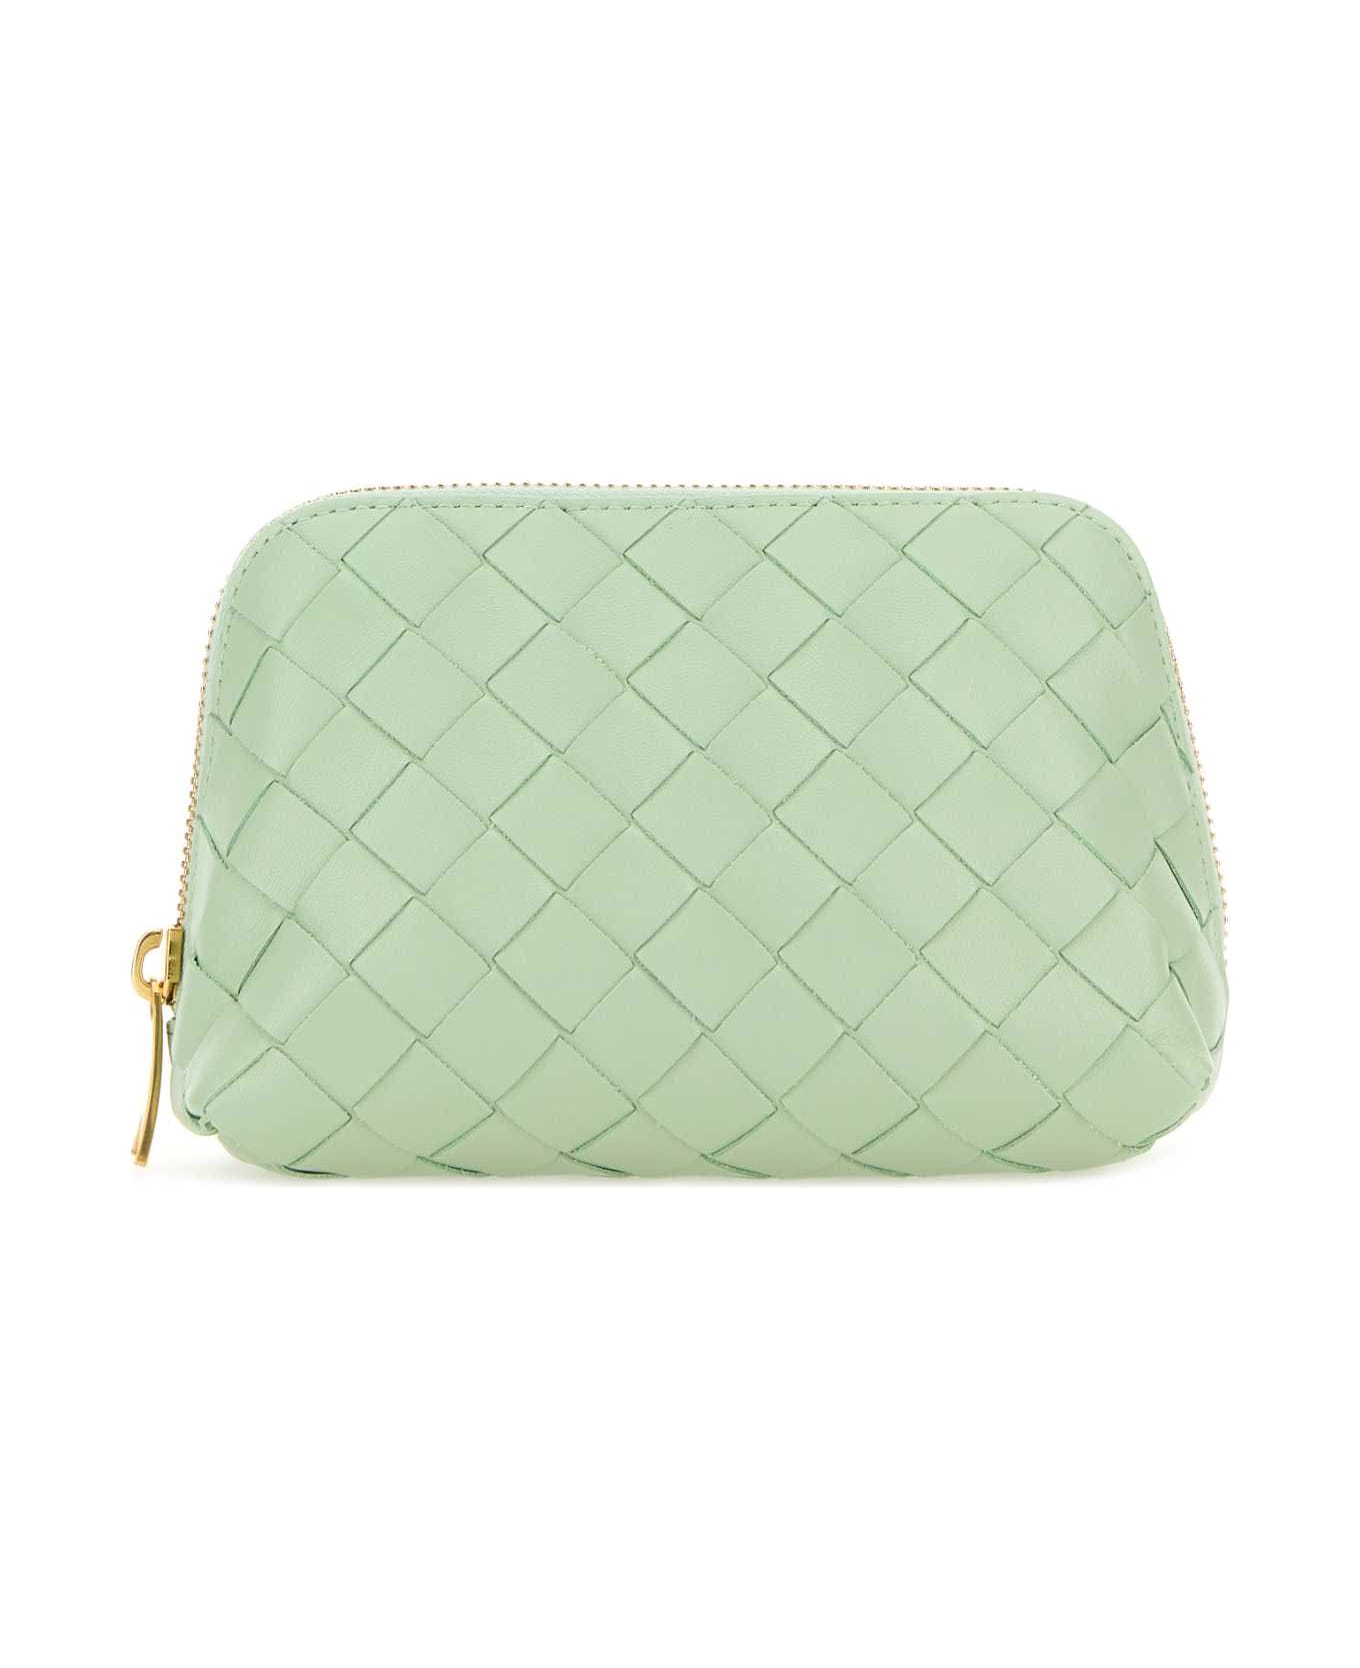 Bottega Veneta Mint Green Leather Beauty Case - MINT クラッチバッグ